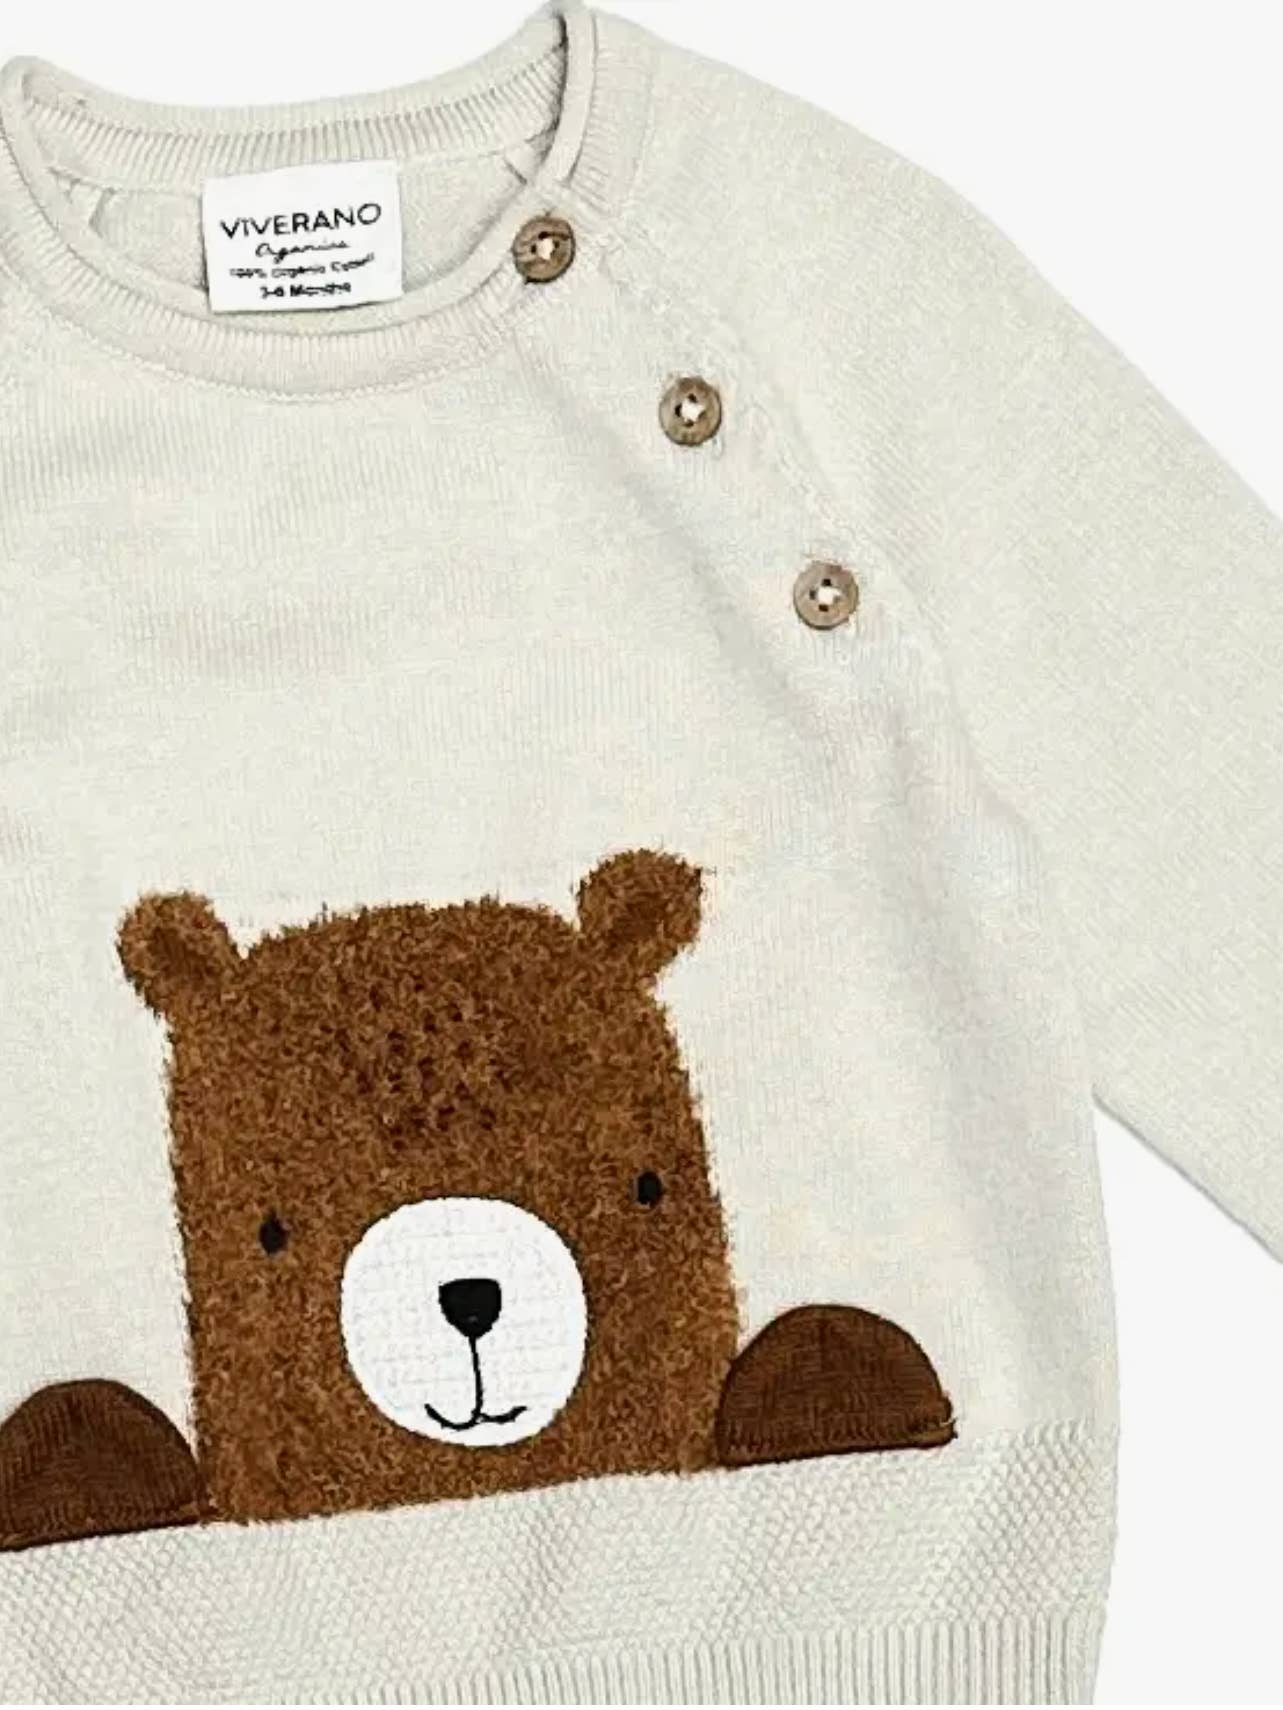 Furry Bear Baby Knit Sweater